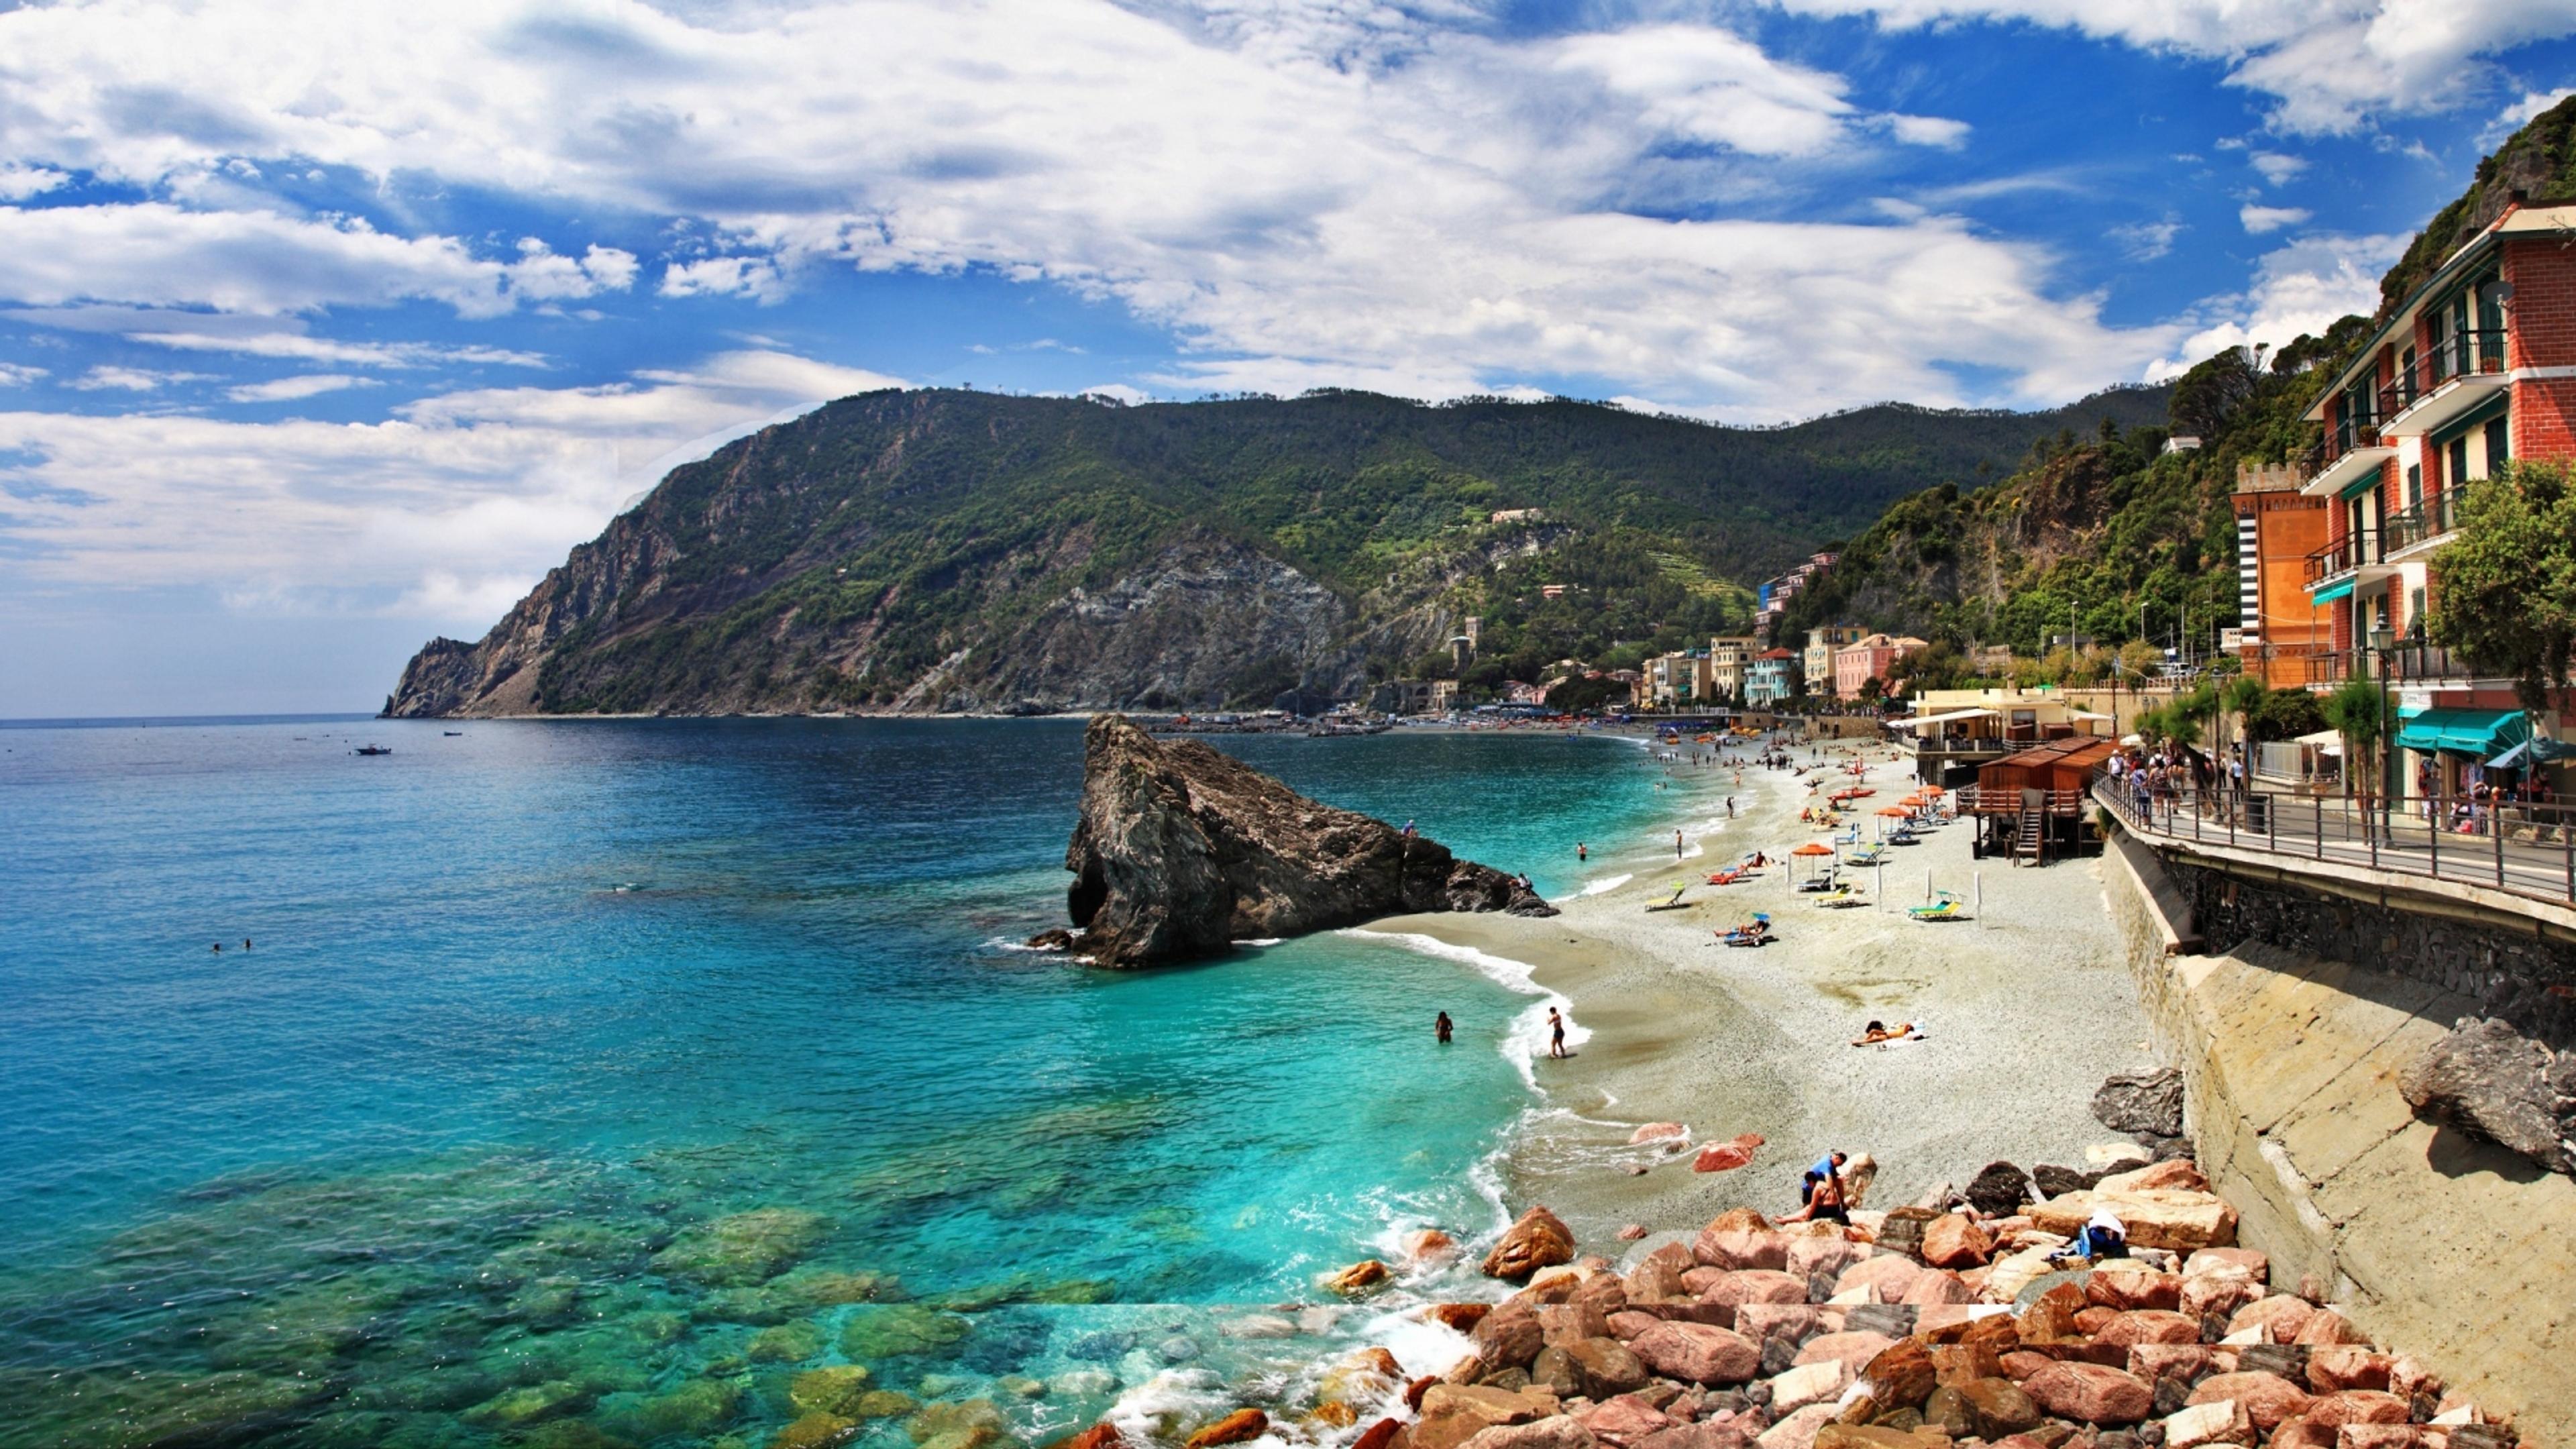 The sea Monterosso, Italy - Beautiful beach Wallpaper ...